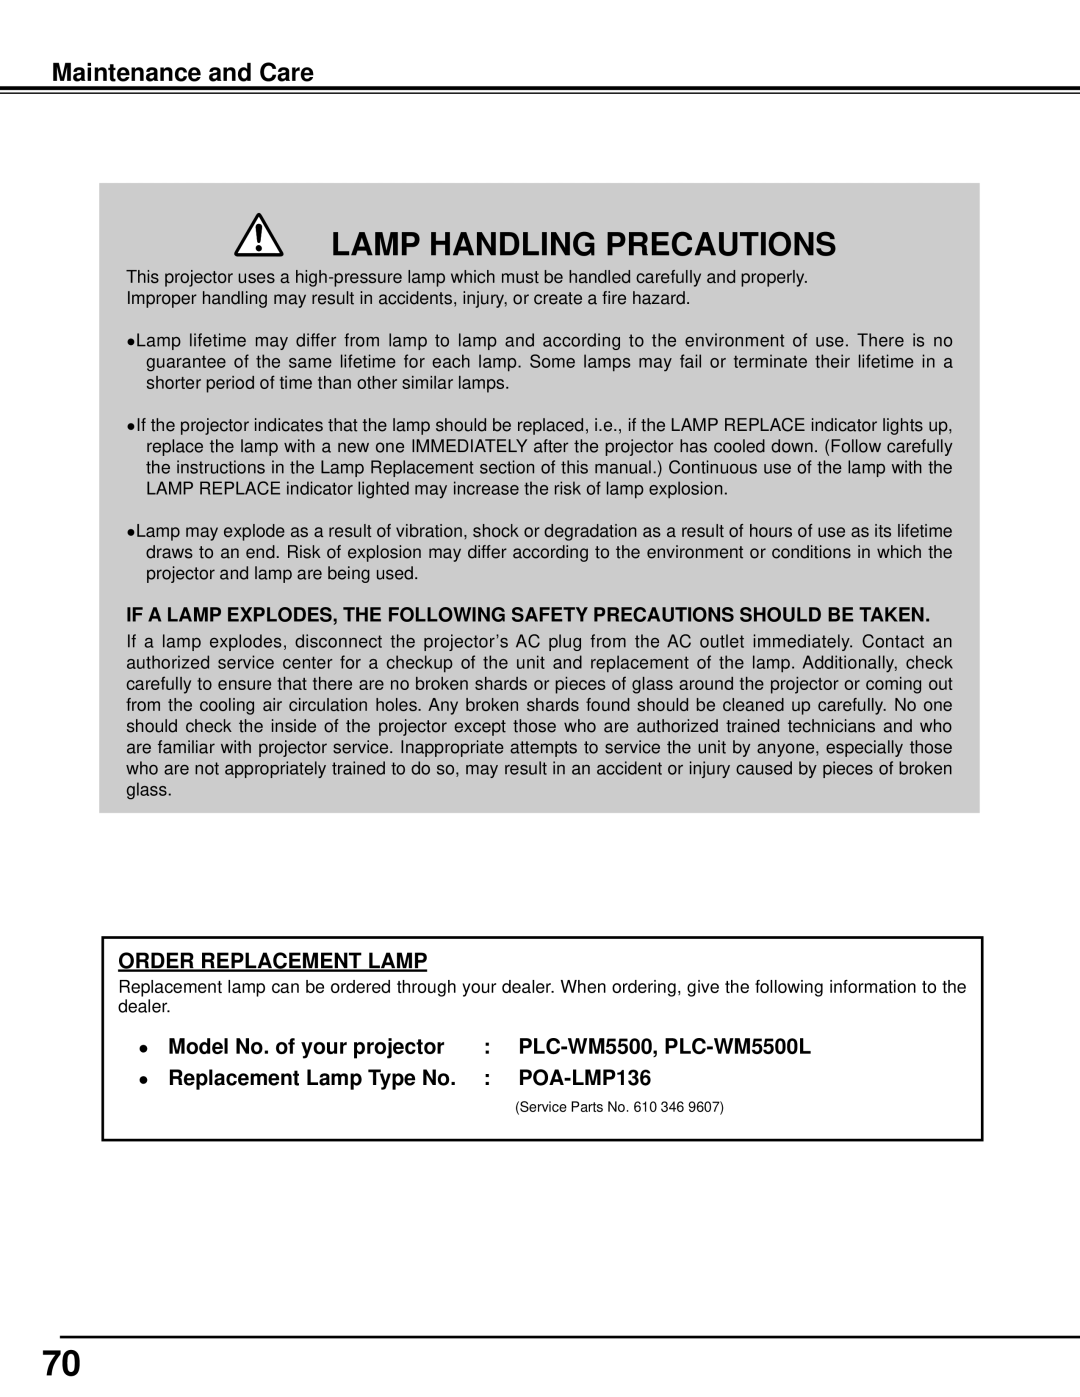 Sanyo WM5500L, PLC-WM5500 owner manual Maintenance and Care, Lamp Handling Precautions 